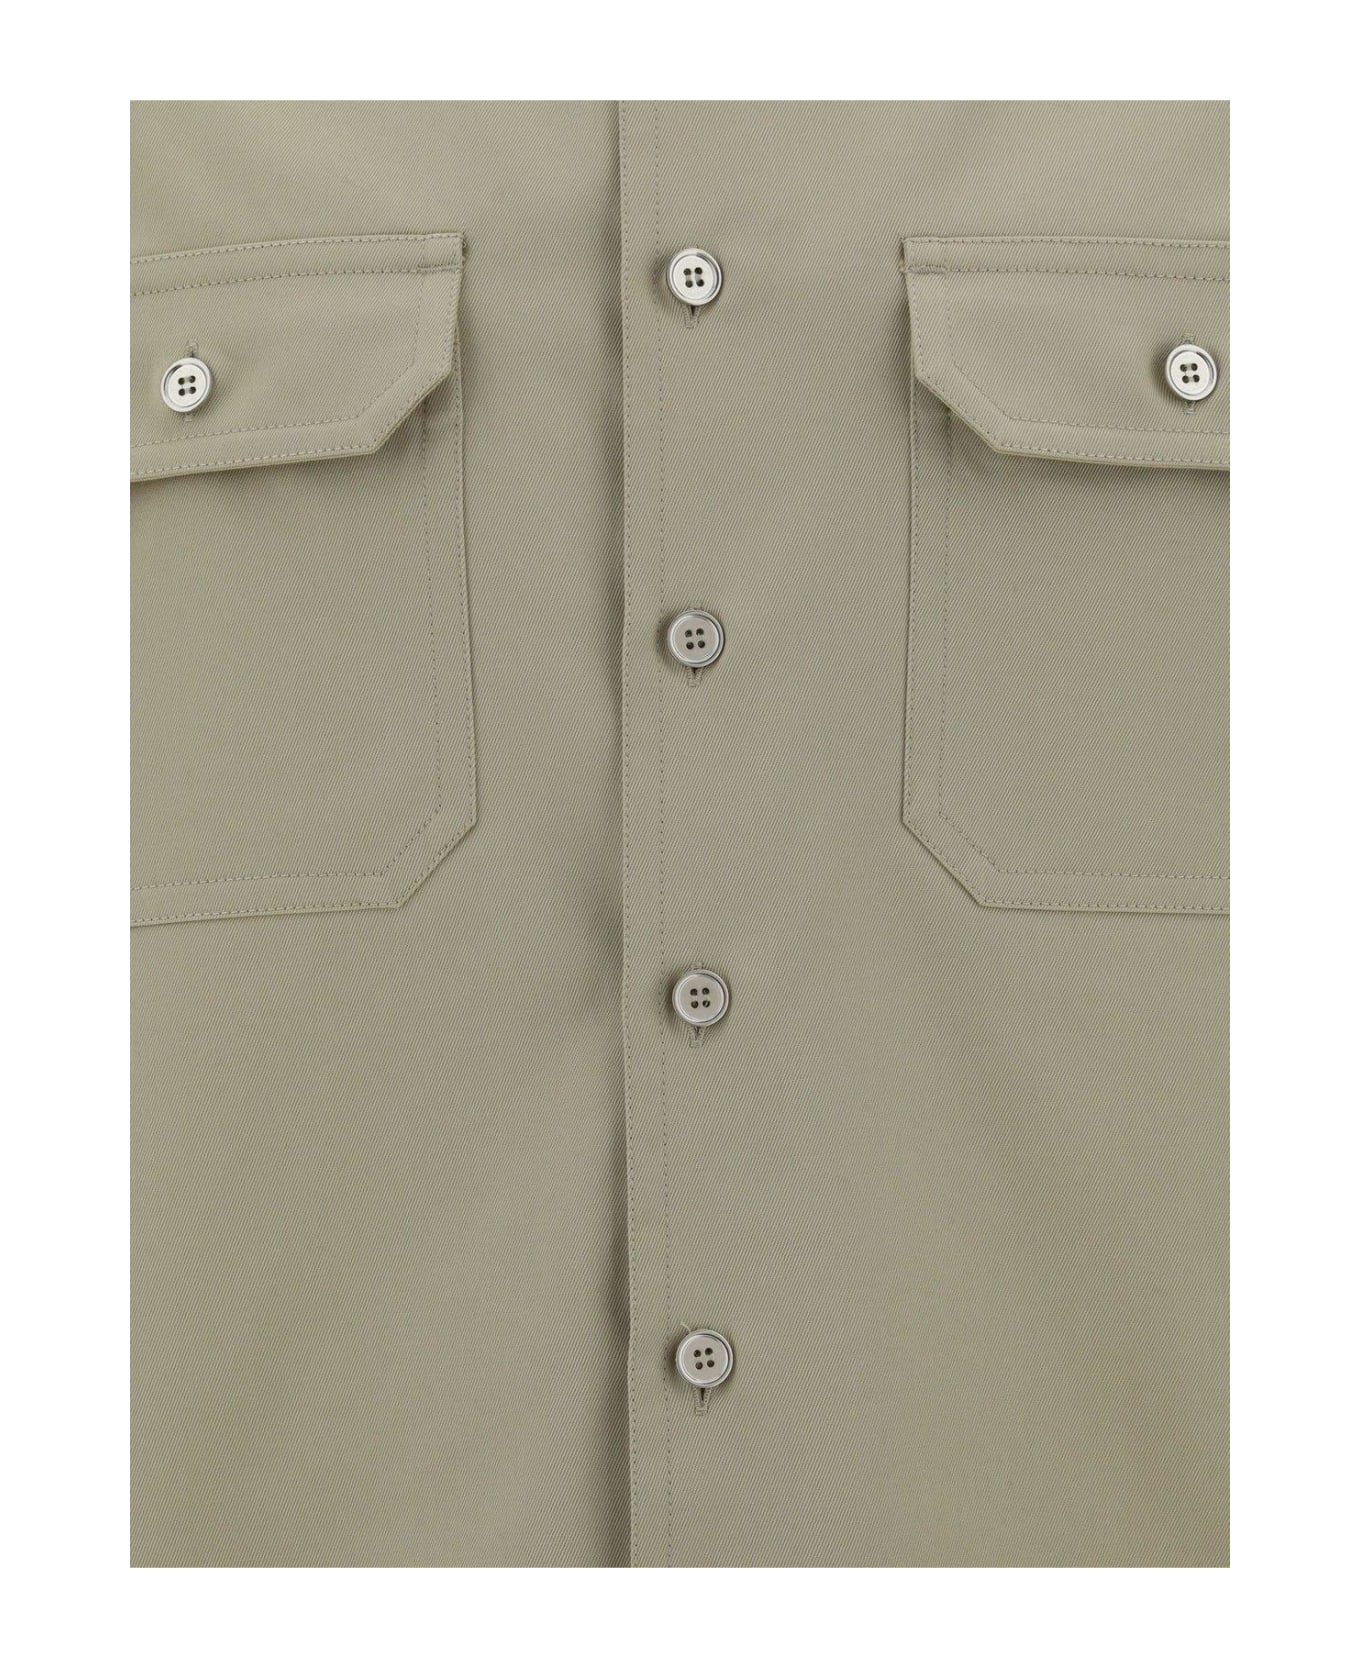 Prada Monochrome Button Up Shirt - Corda